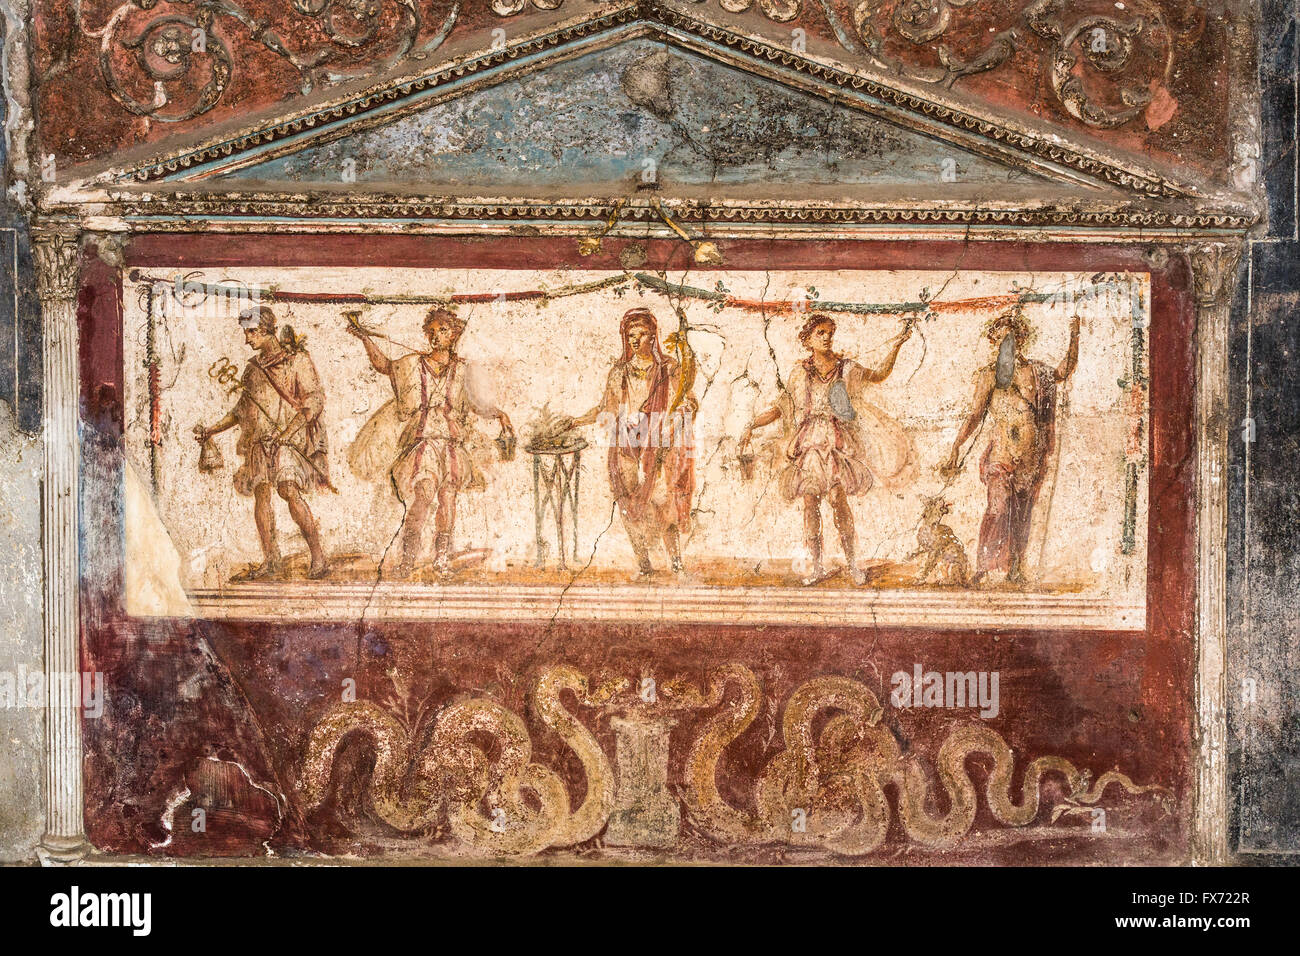 Murales romanos fotografías e imágenes de alta resolución - Alamy